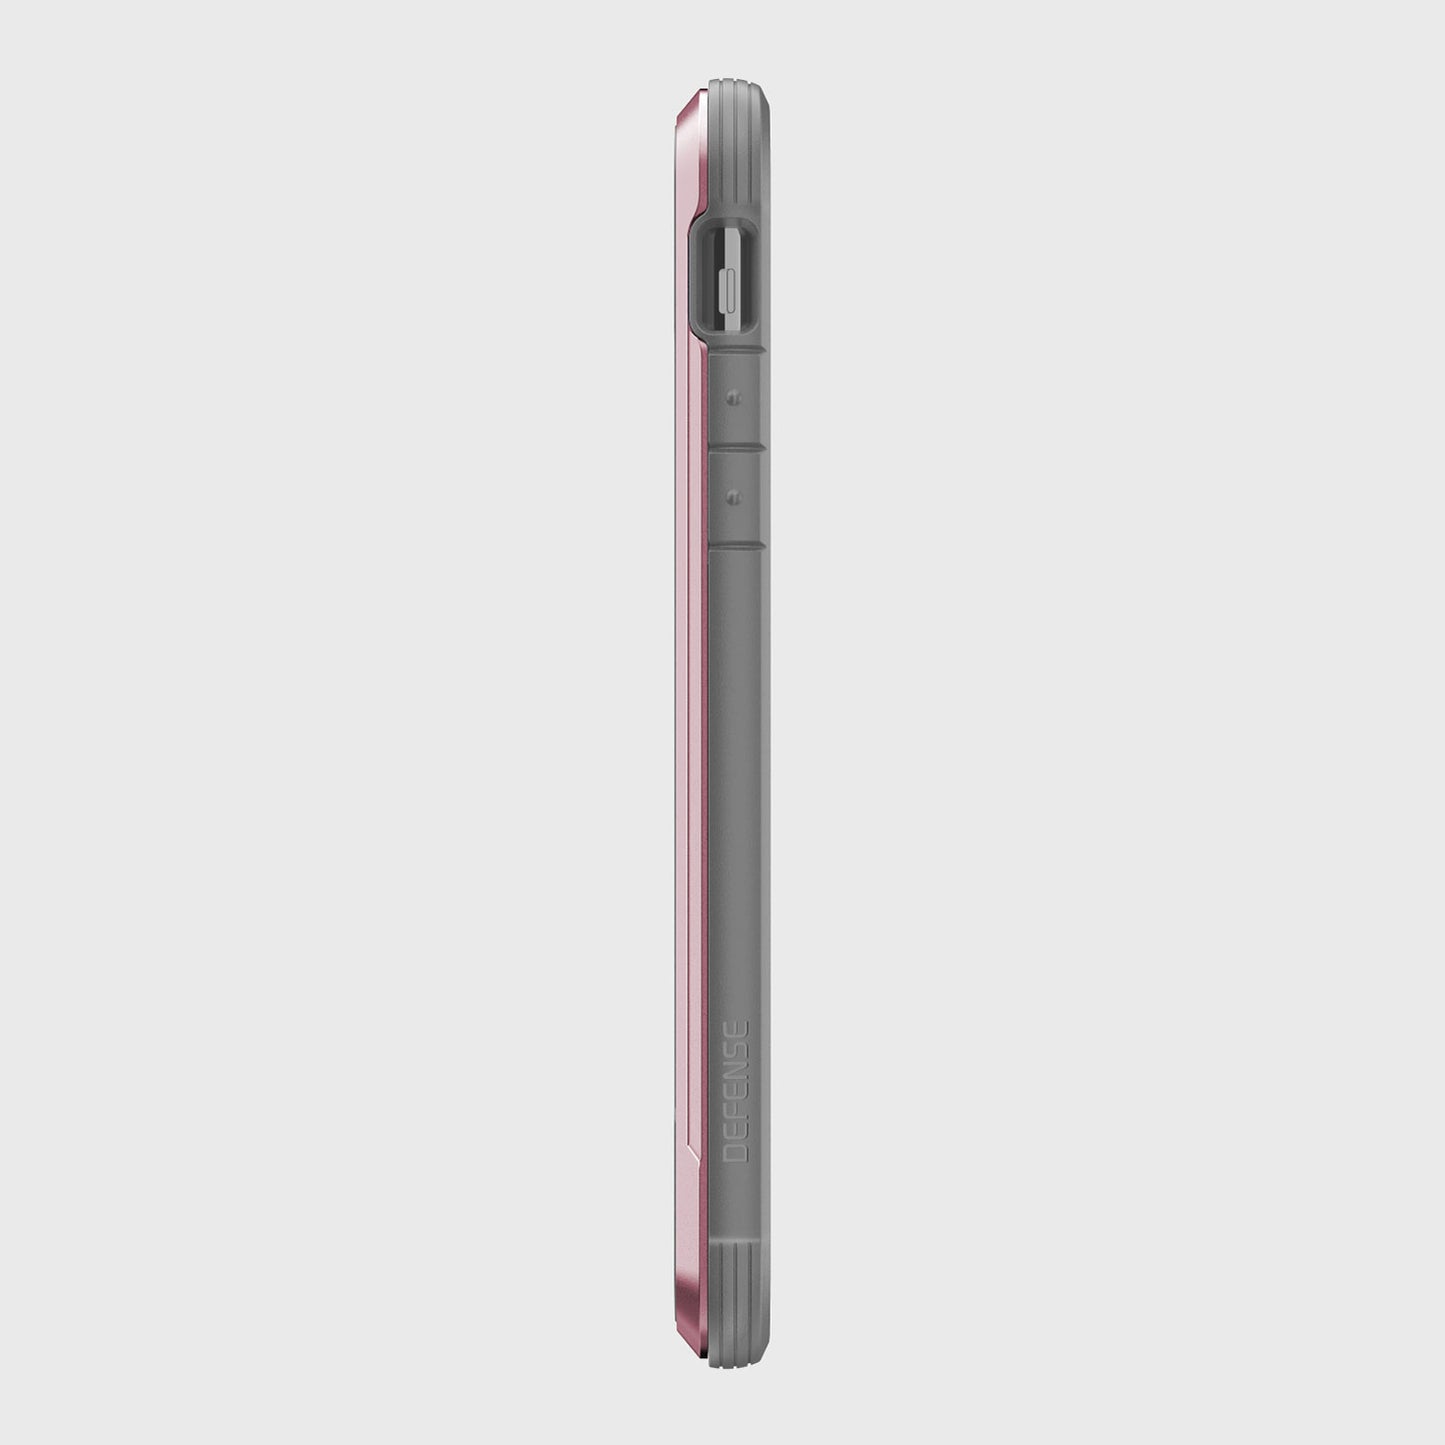 iPhone 11 Pro Max Case - SHIELD